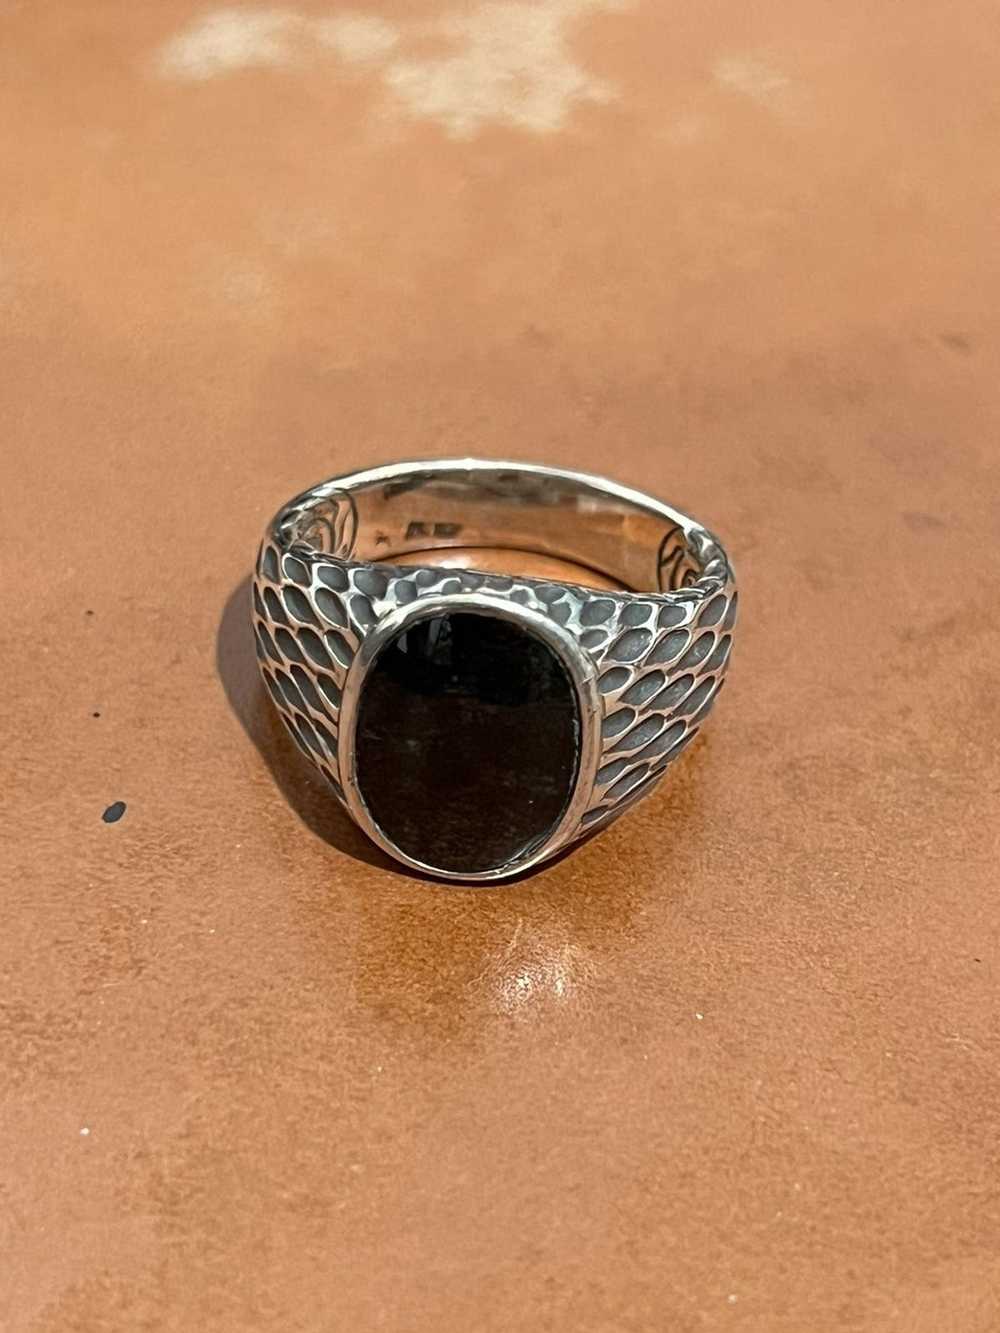 Designer John Hardy Legend Naga Ring - image 1